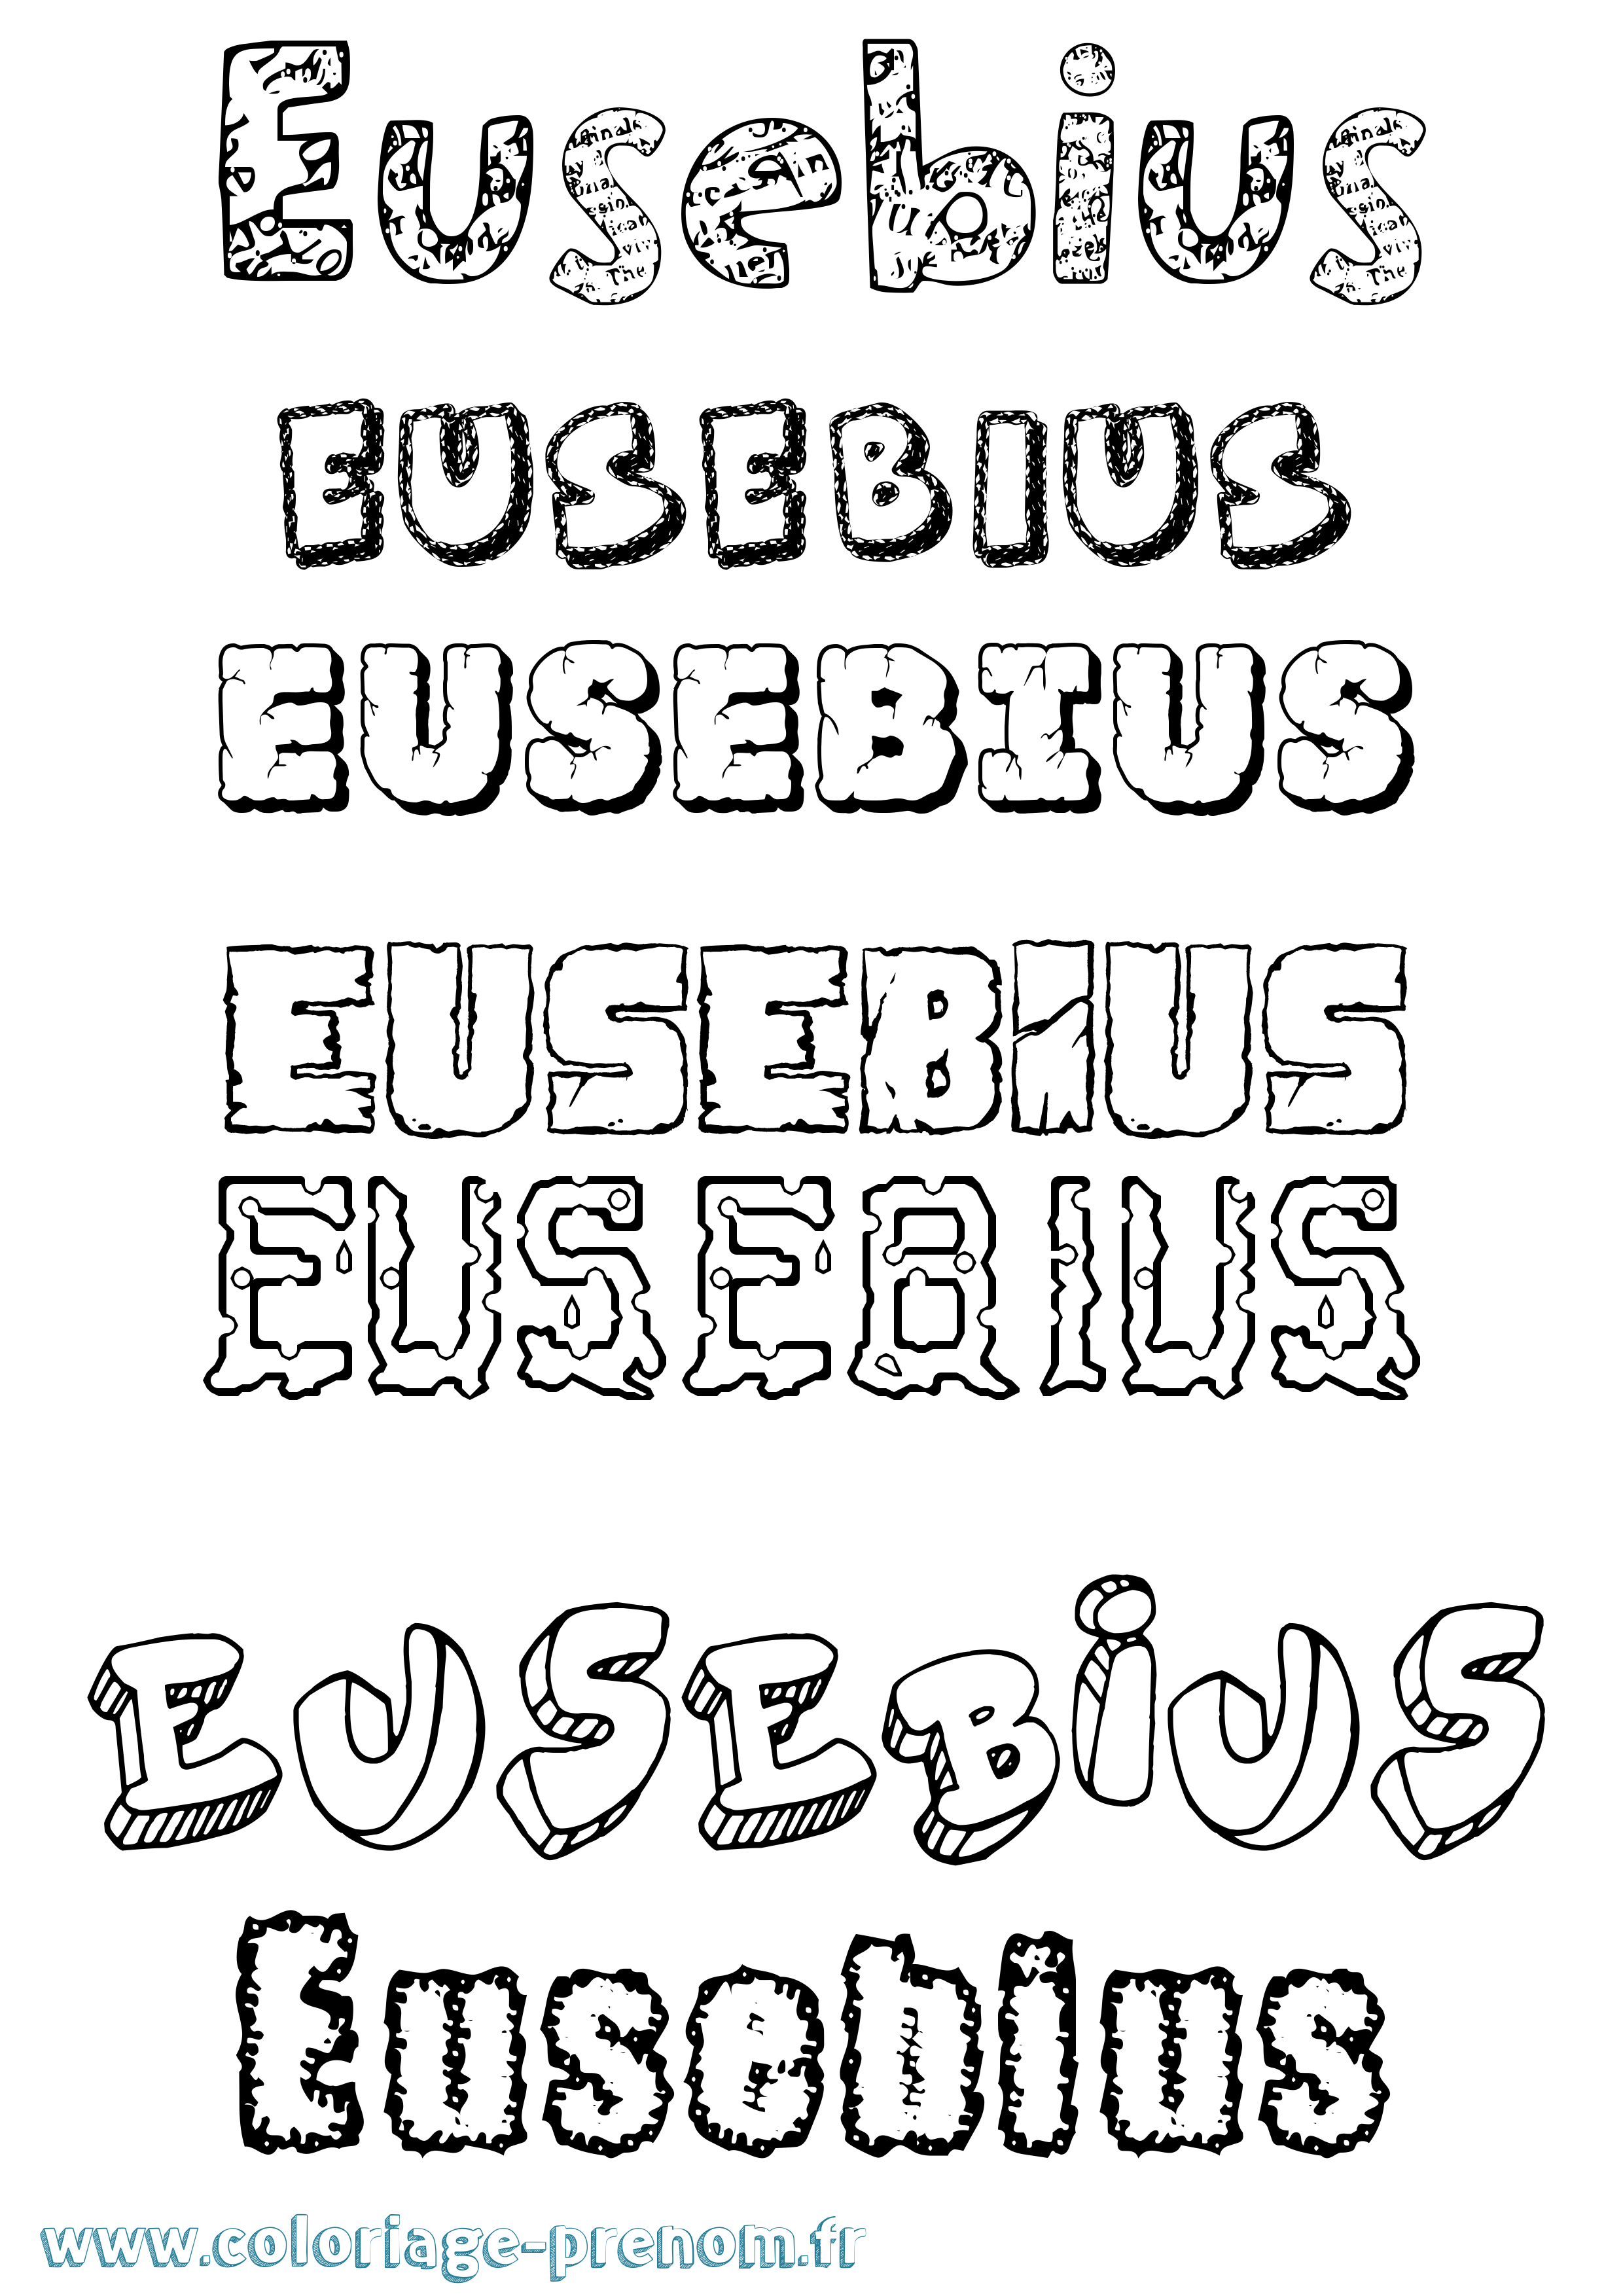 Coloriage prénom Eusebius Destructuré